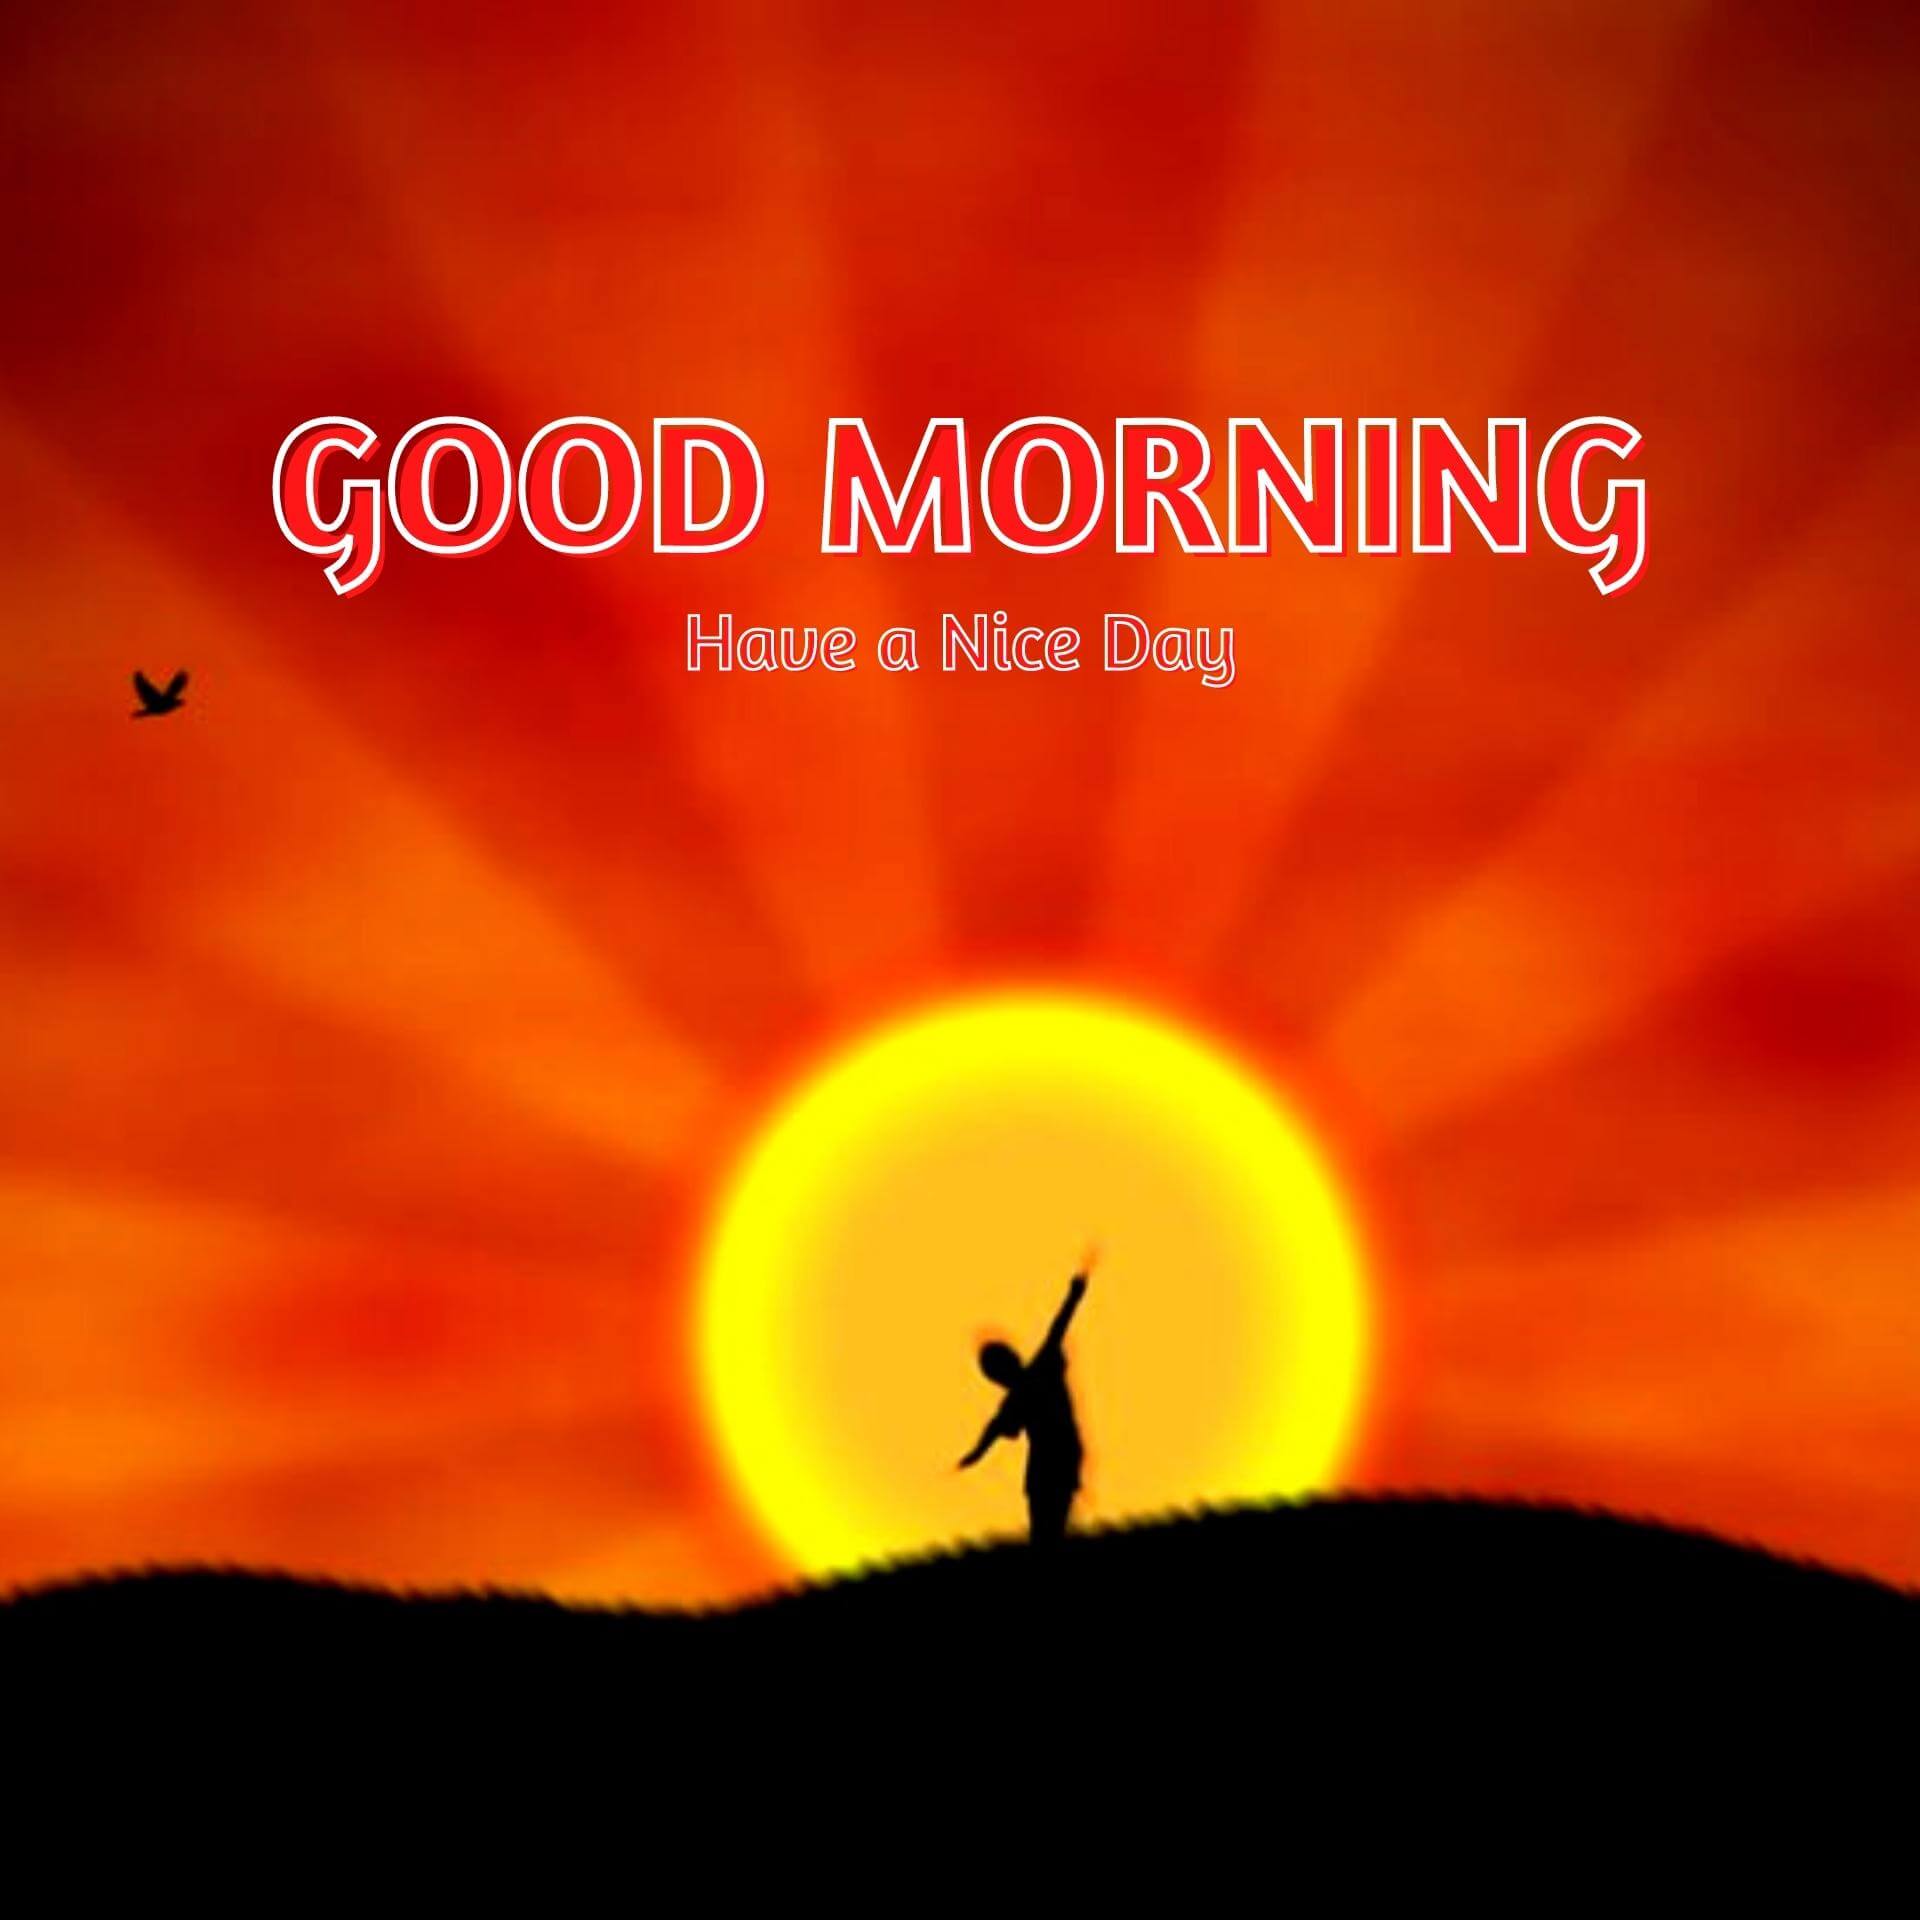 Sunrise Good Morning Wallpaper Free Download for Whatsapp